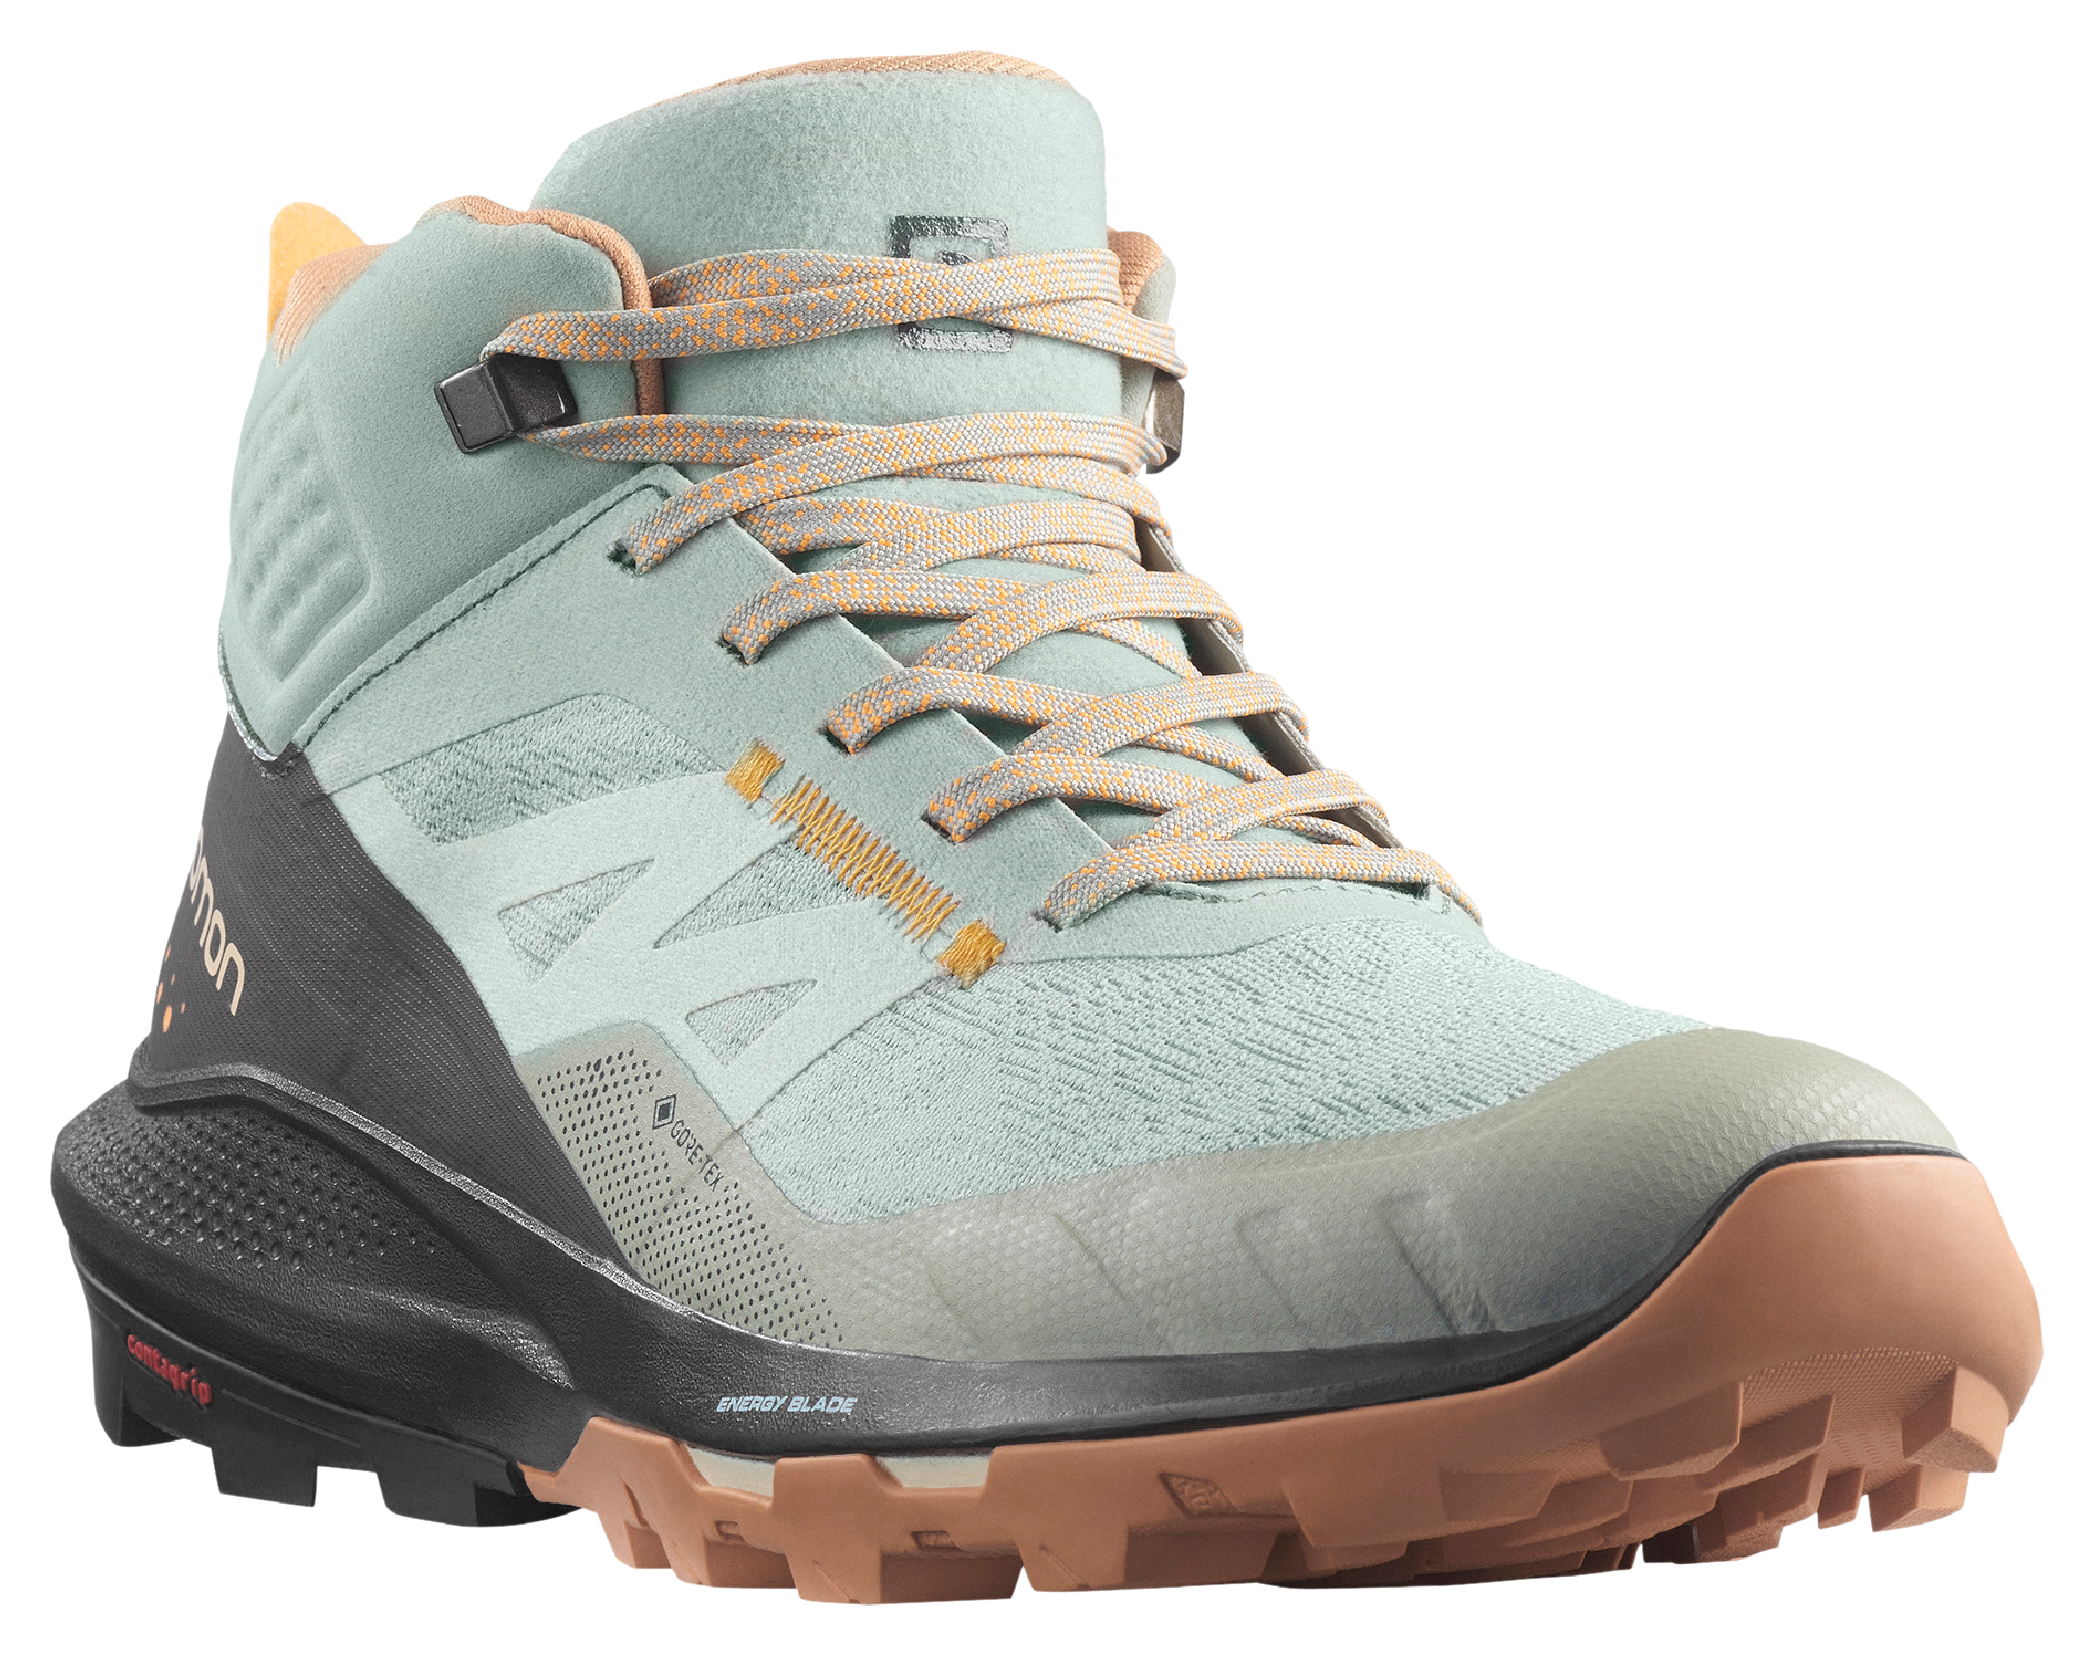 Salomon Outpulse Mid GORE-TEX Hiking Boots for Ladies - Wrought Iron/Ebony/Blaze Orange - 9.5M